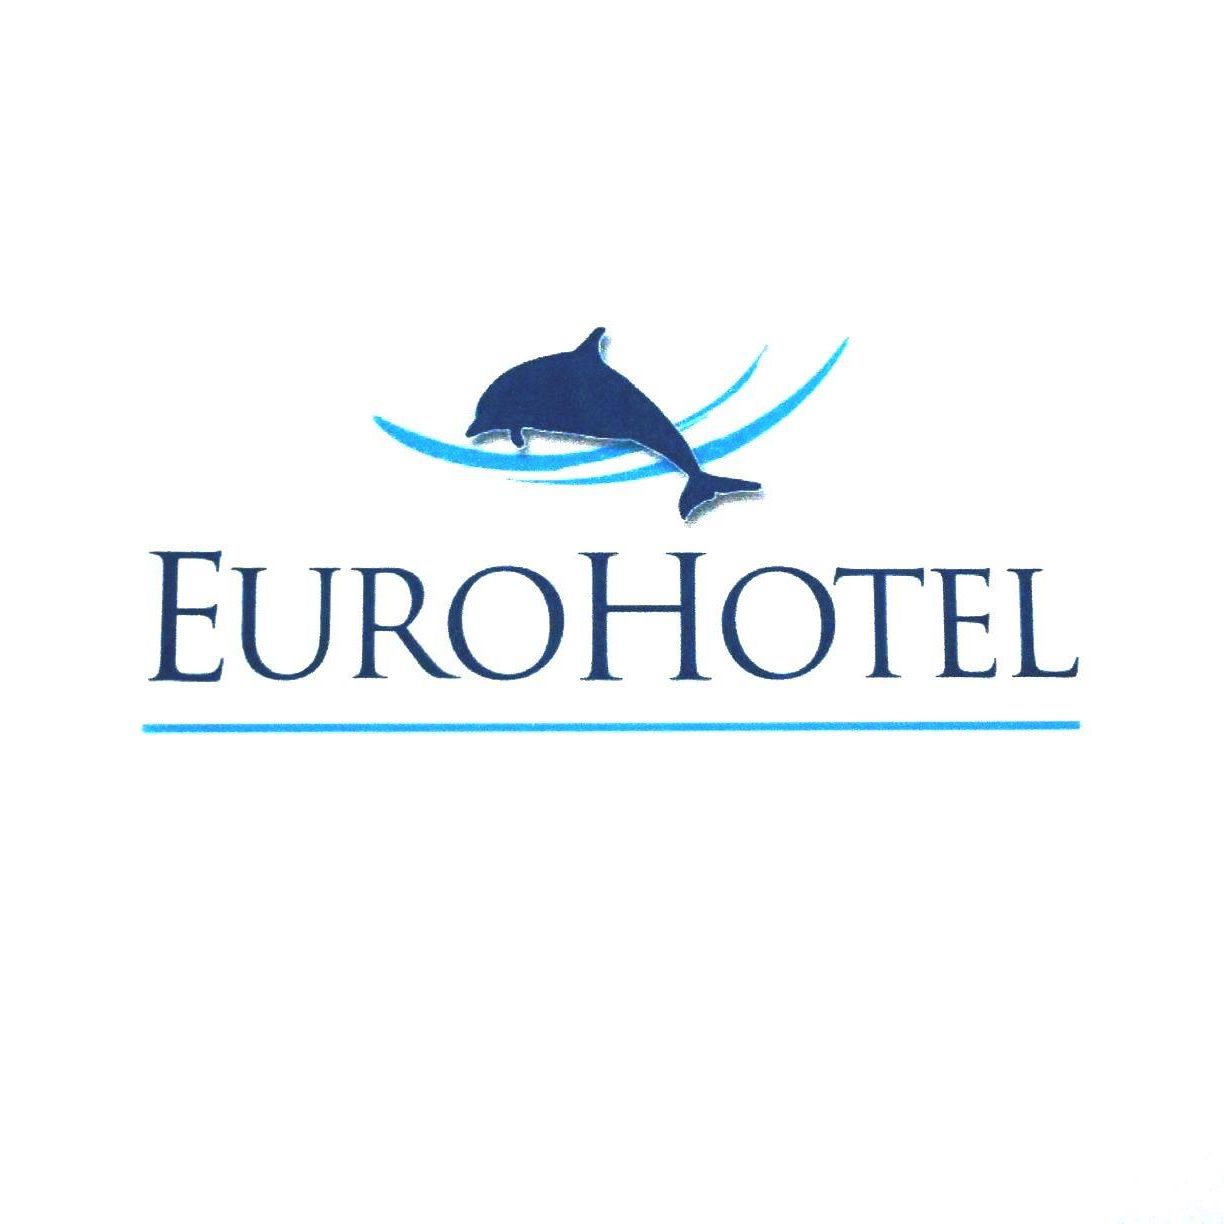 Eurohotel Group